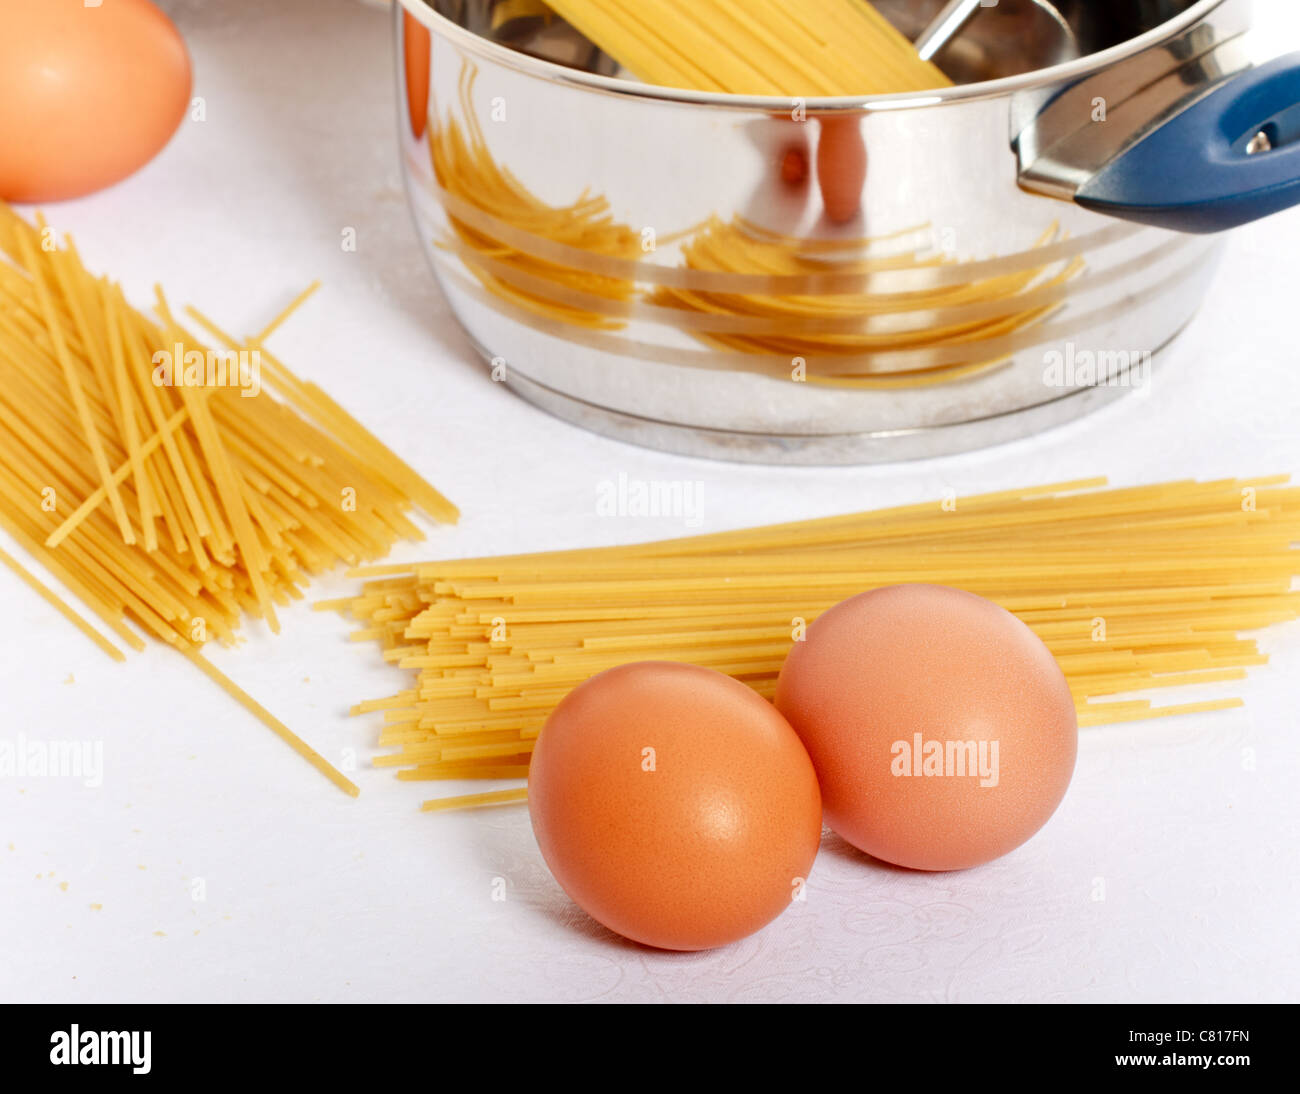 spaghetti, eggs and kitchen utensil on table Stock Photo